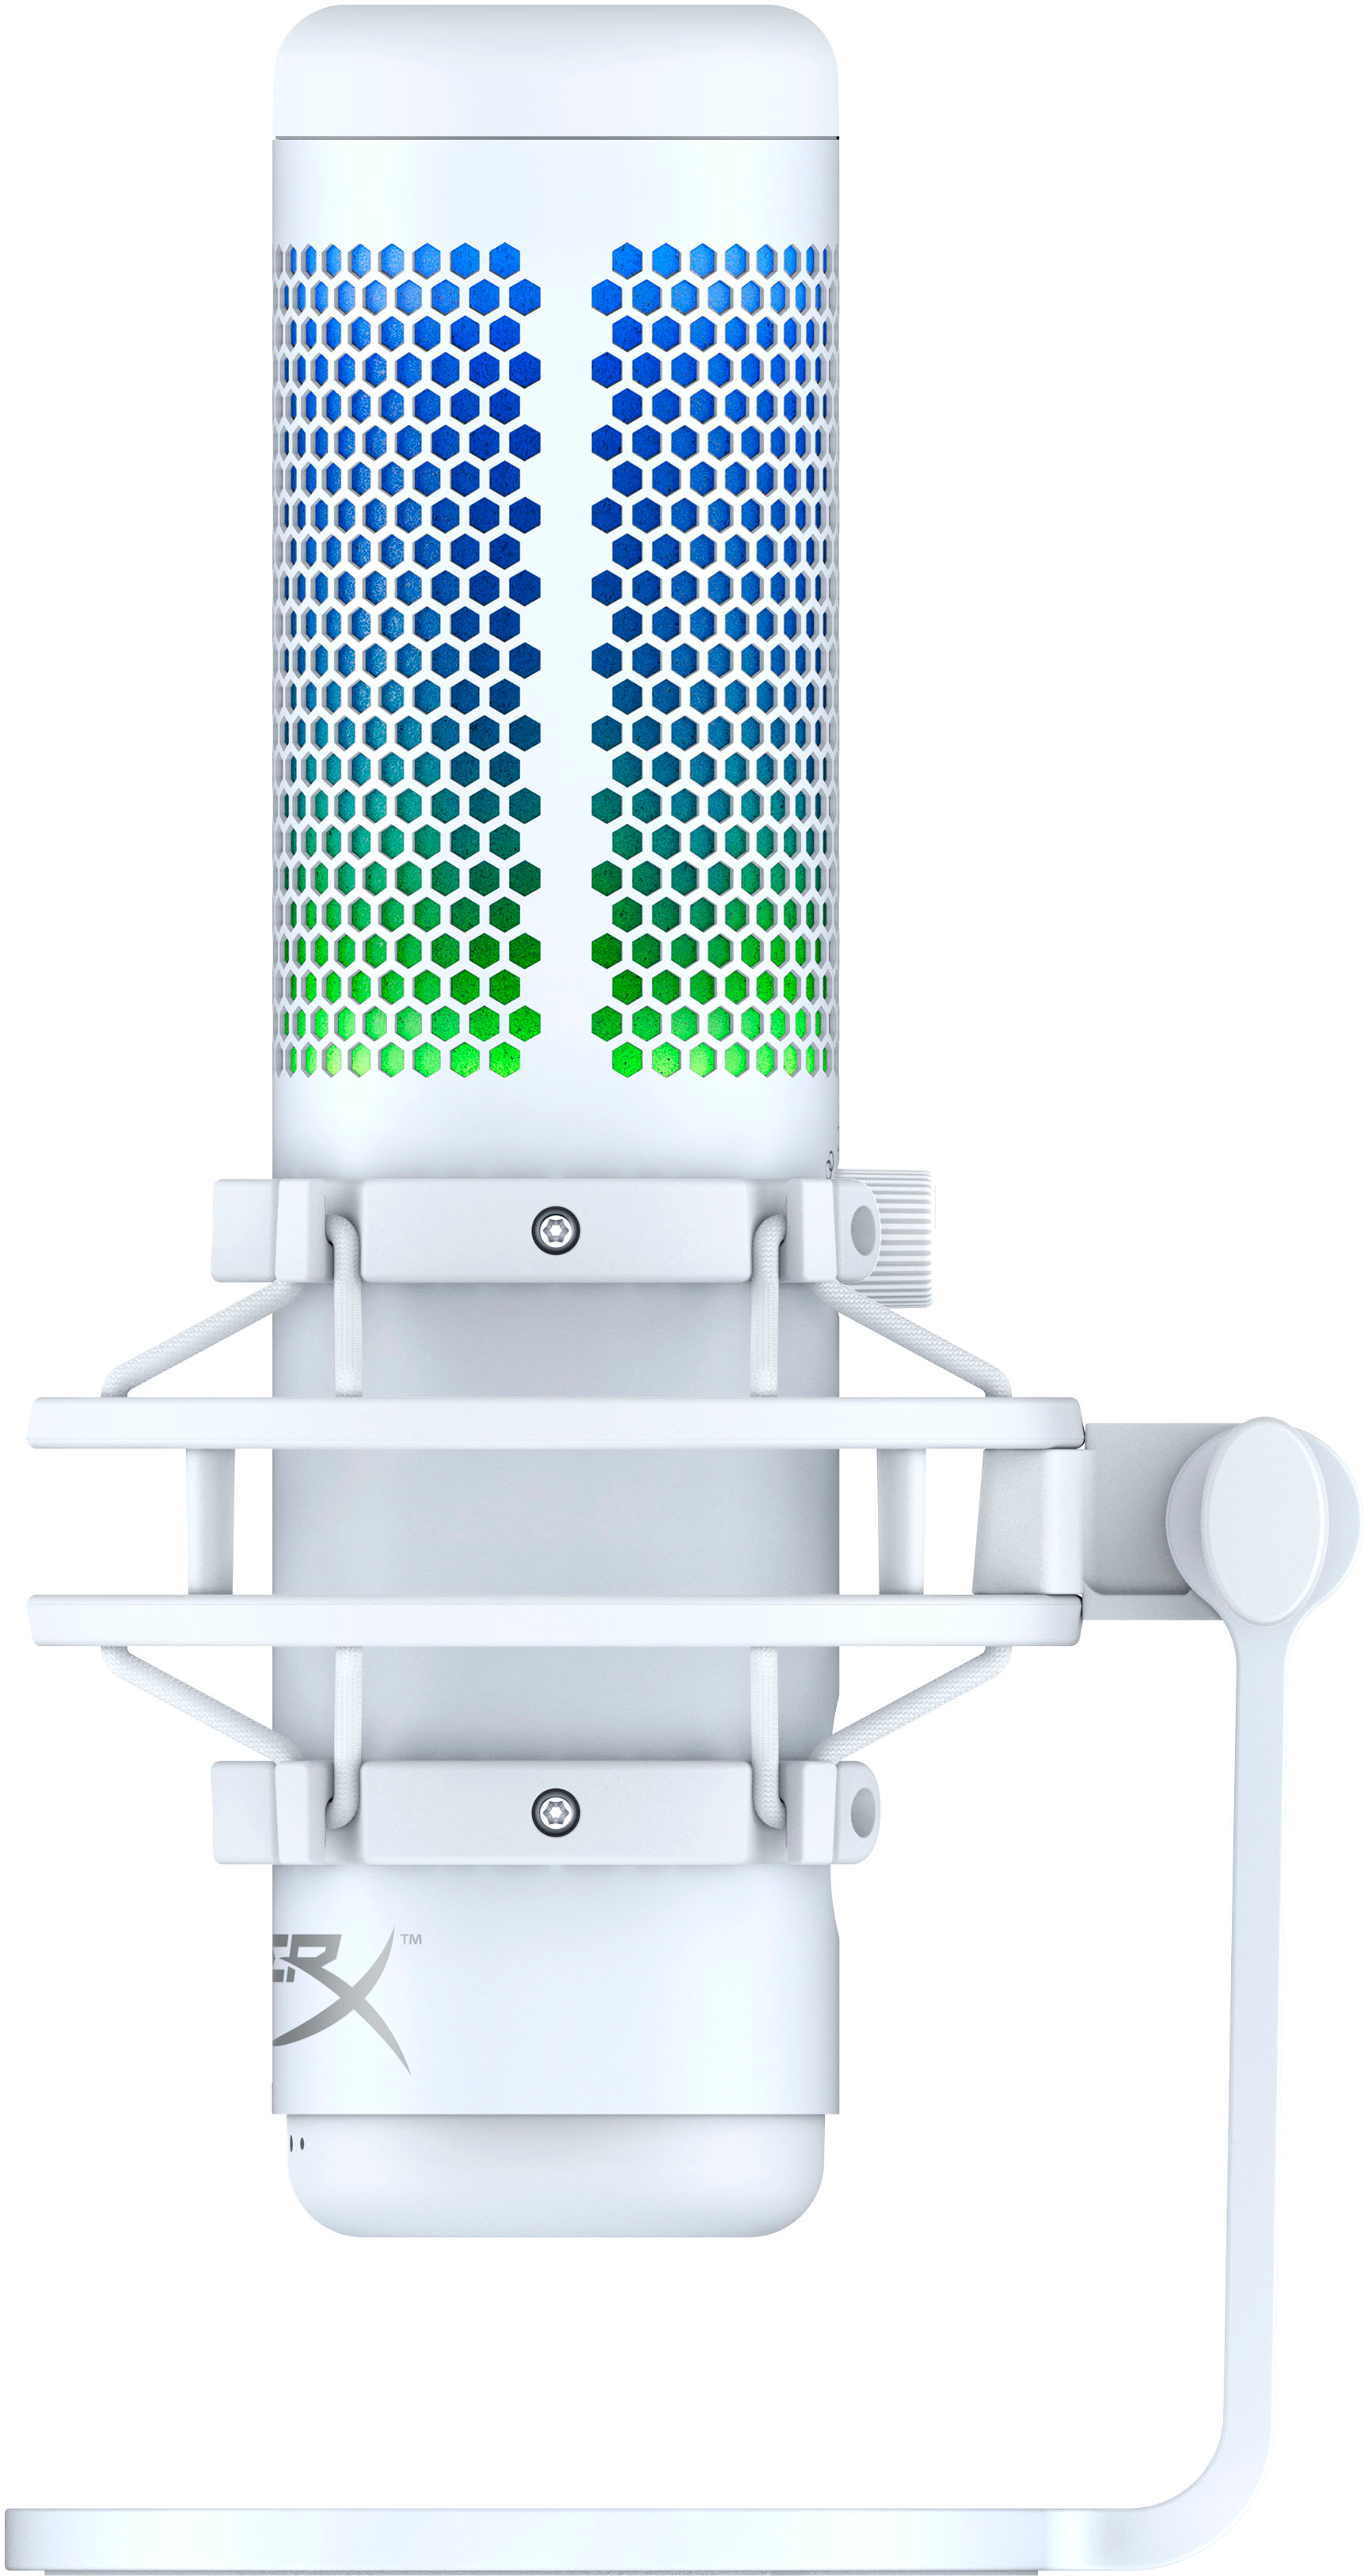 HyperX QuadCast S White RGB USB Condenser Microphone